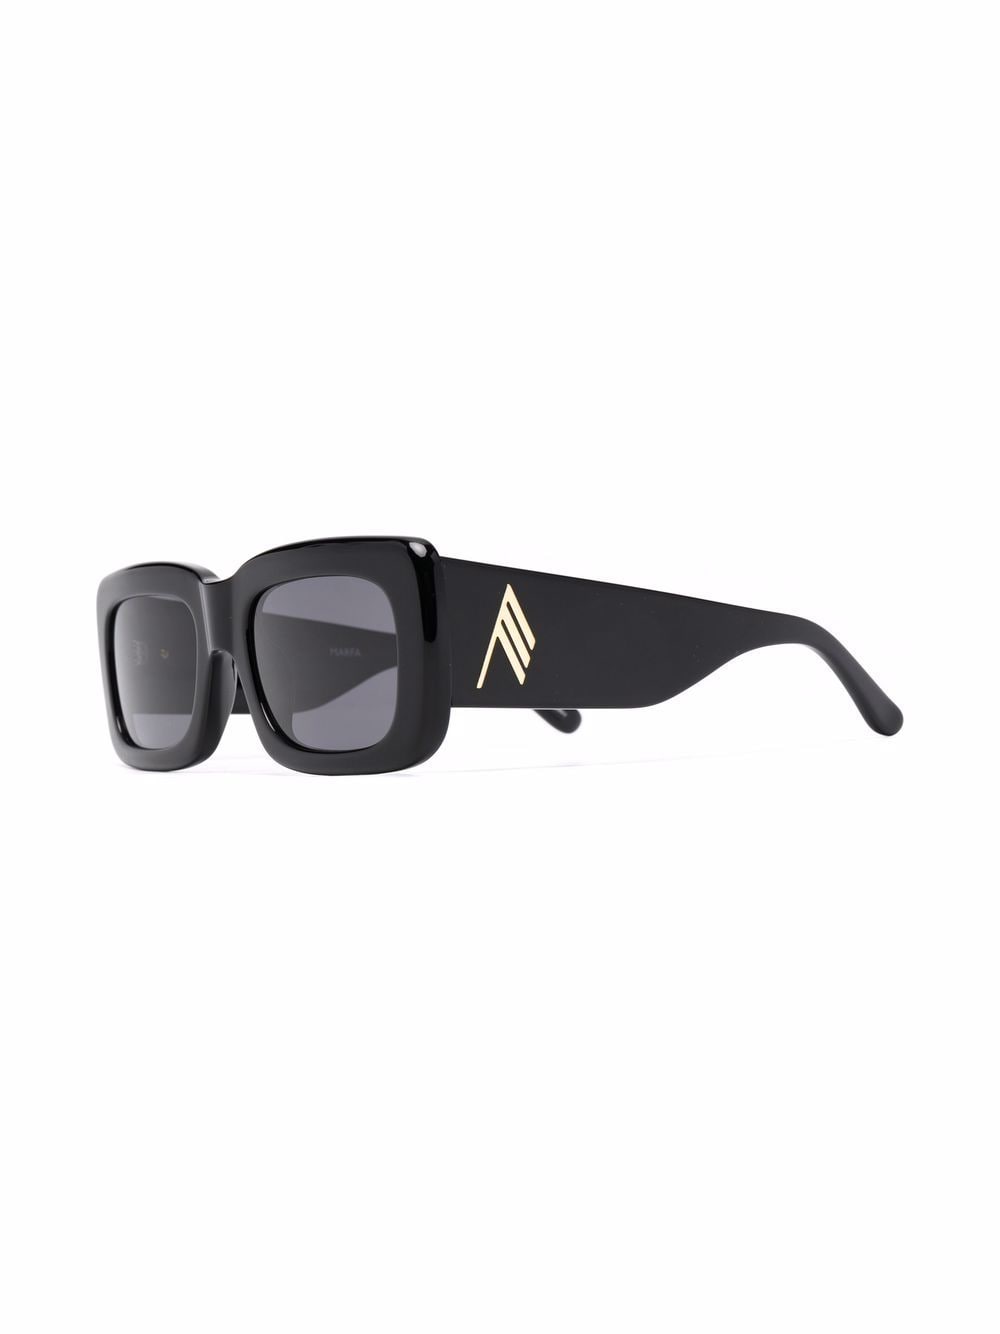 Marfa rectangular sunglasses<BR/><BR/><BR/>